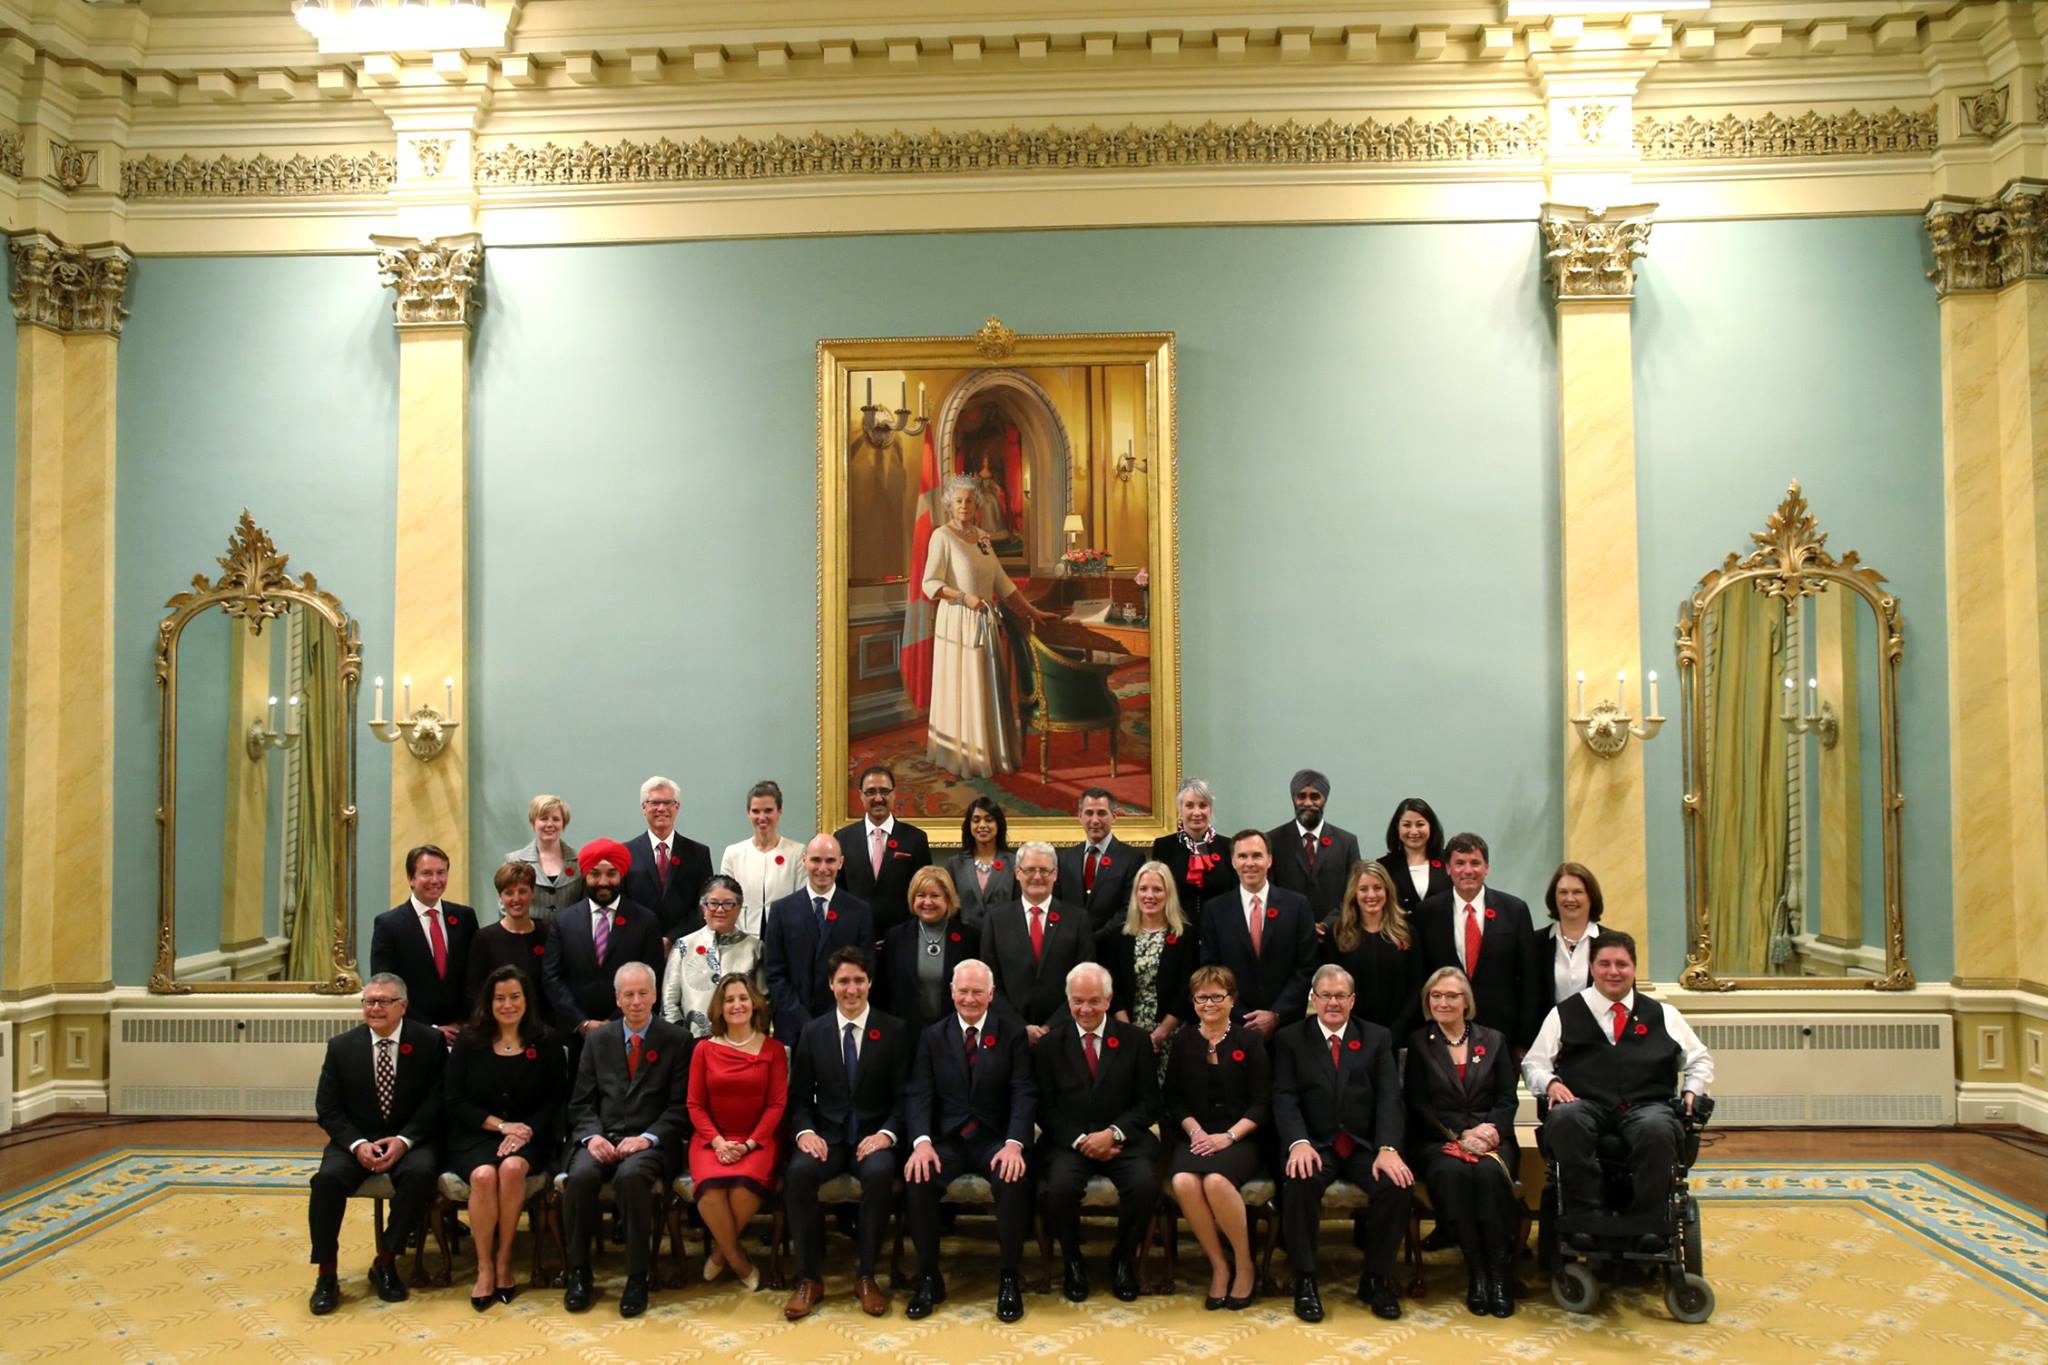 Opinion: Native people seek a mutual partnership with Canada